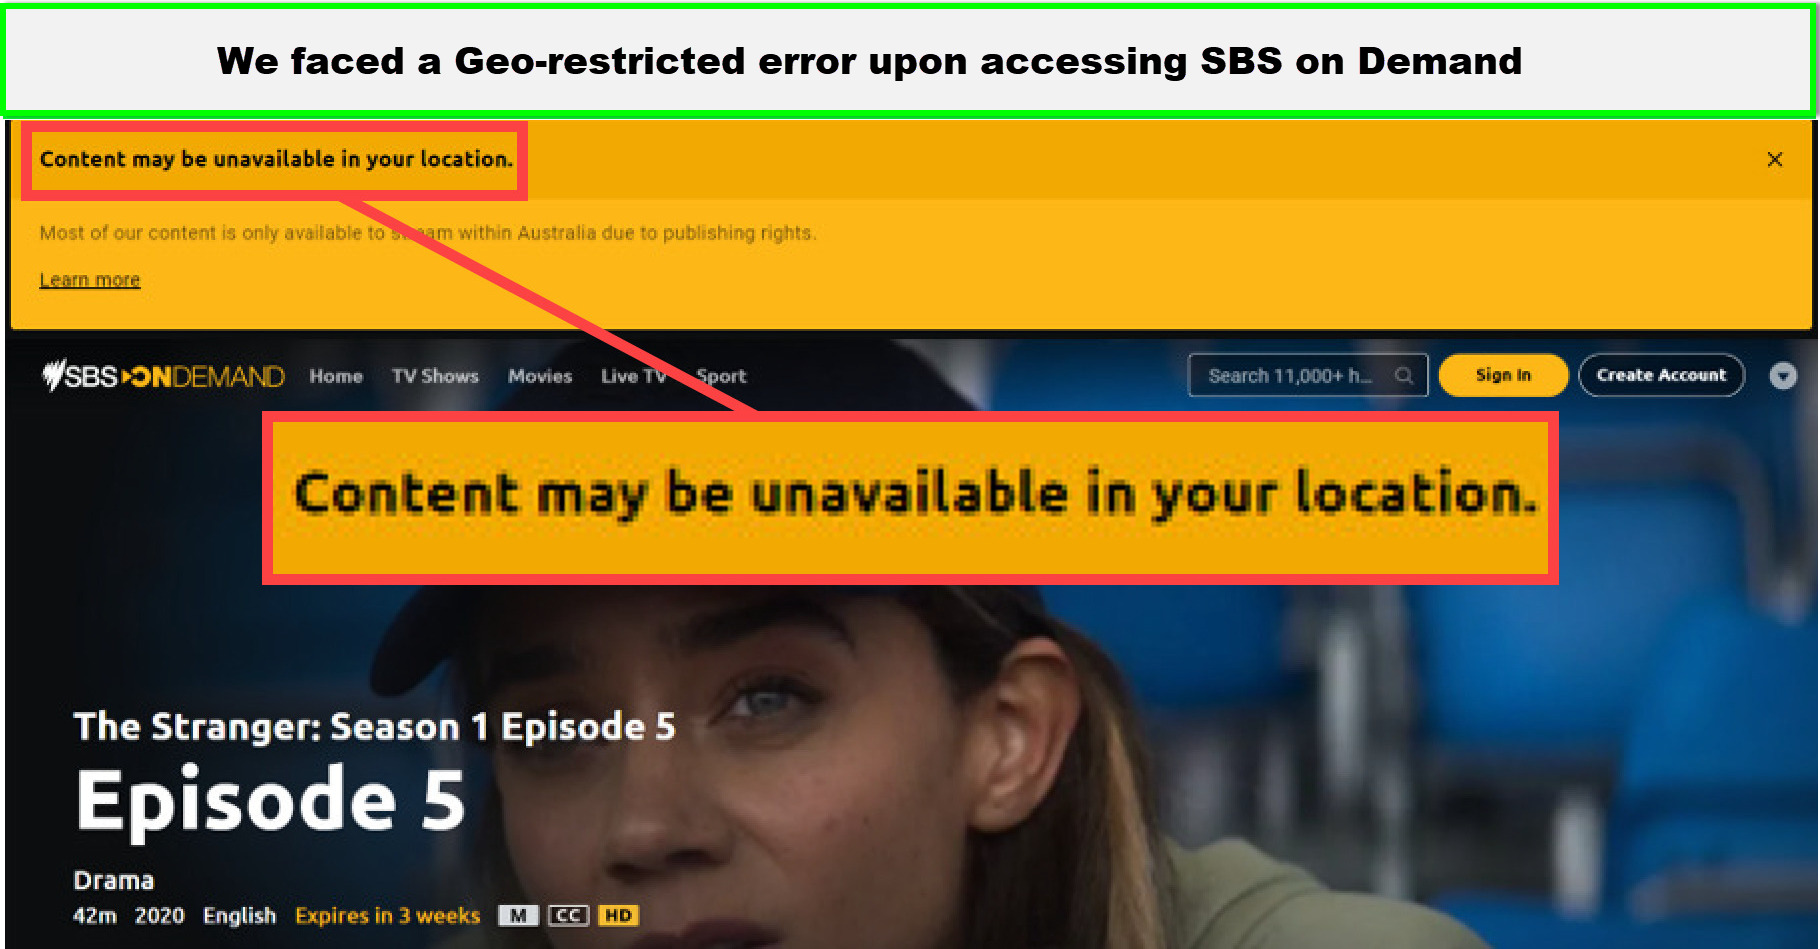 sbs-on-demand-geo-restriction-error